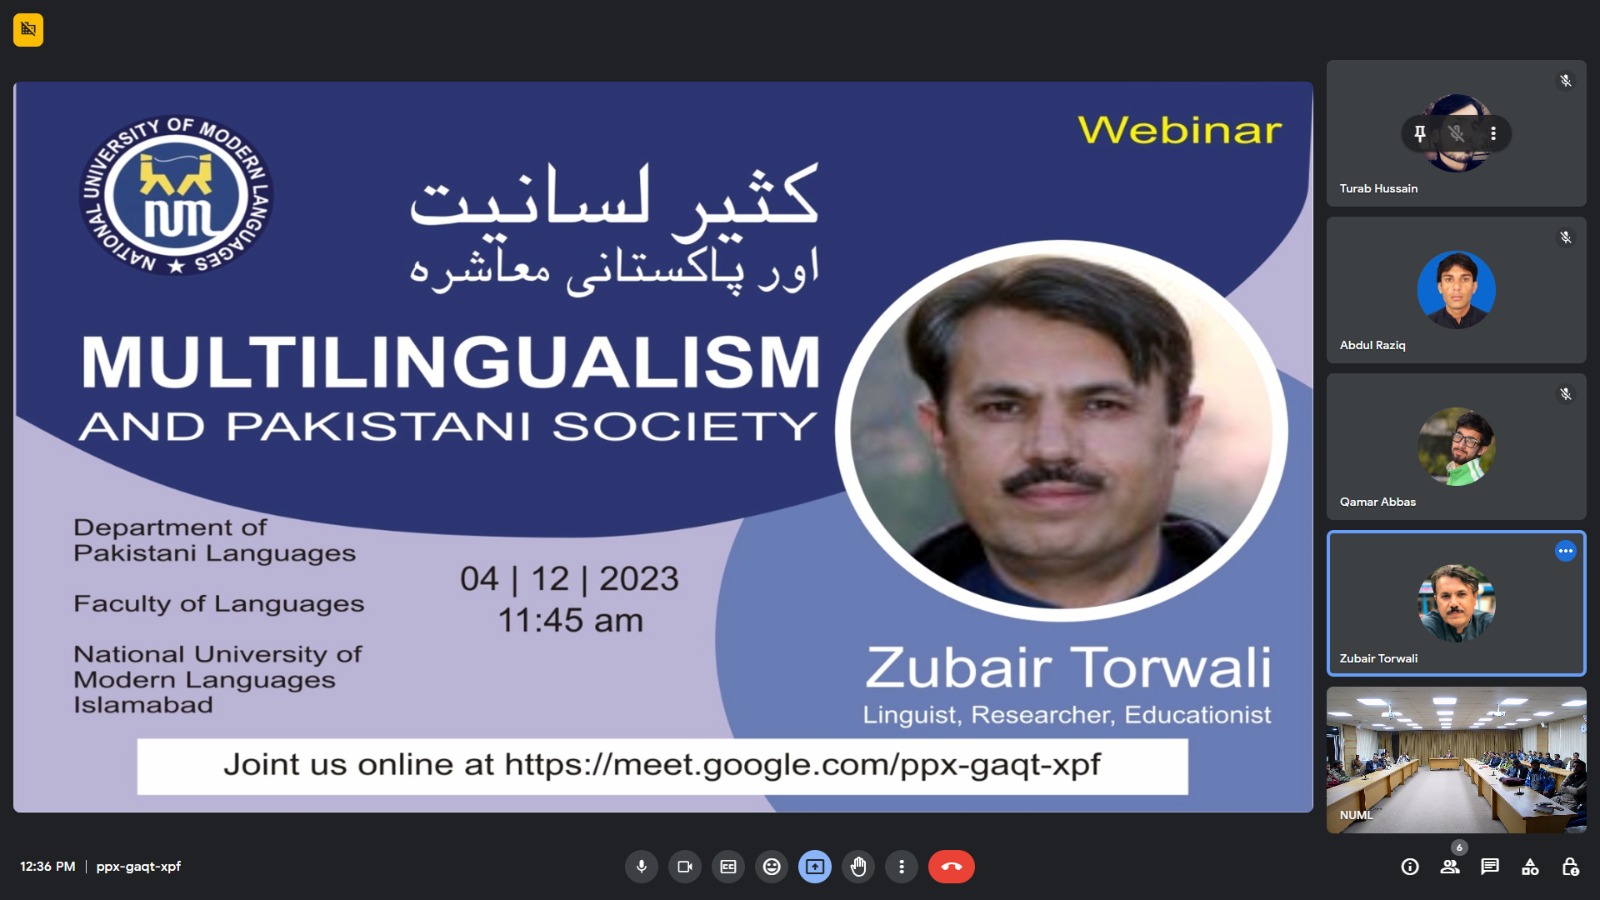 Multilingualism and Pakistani society